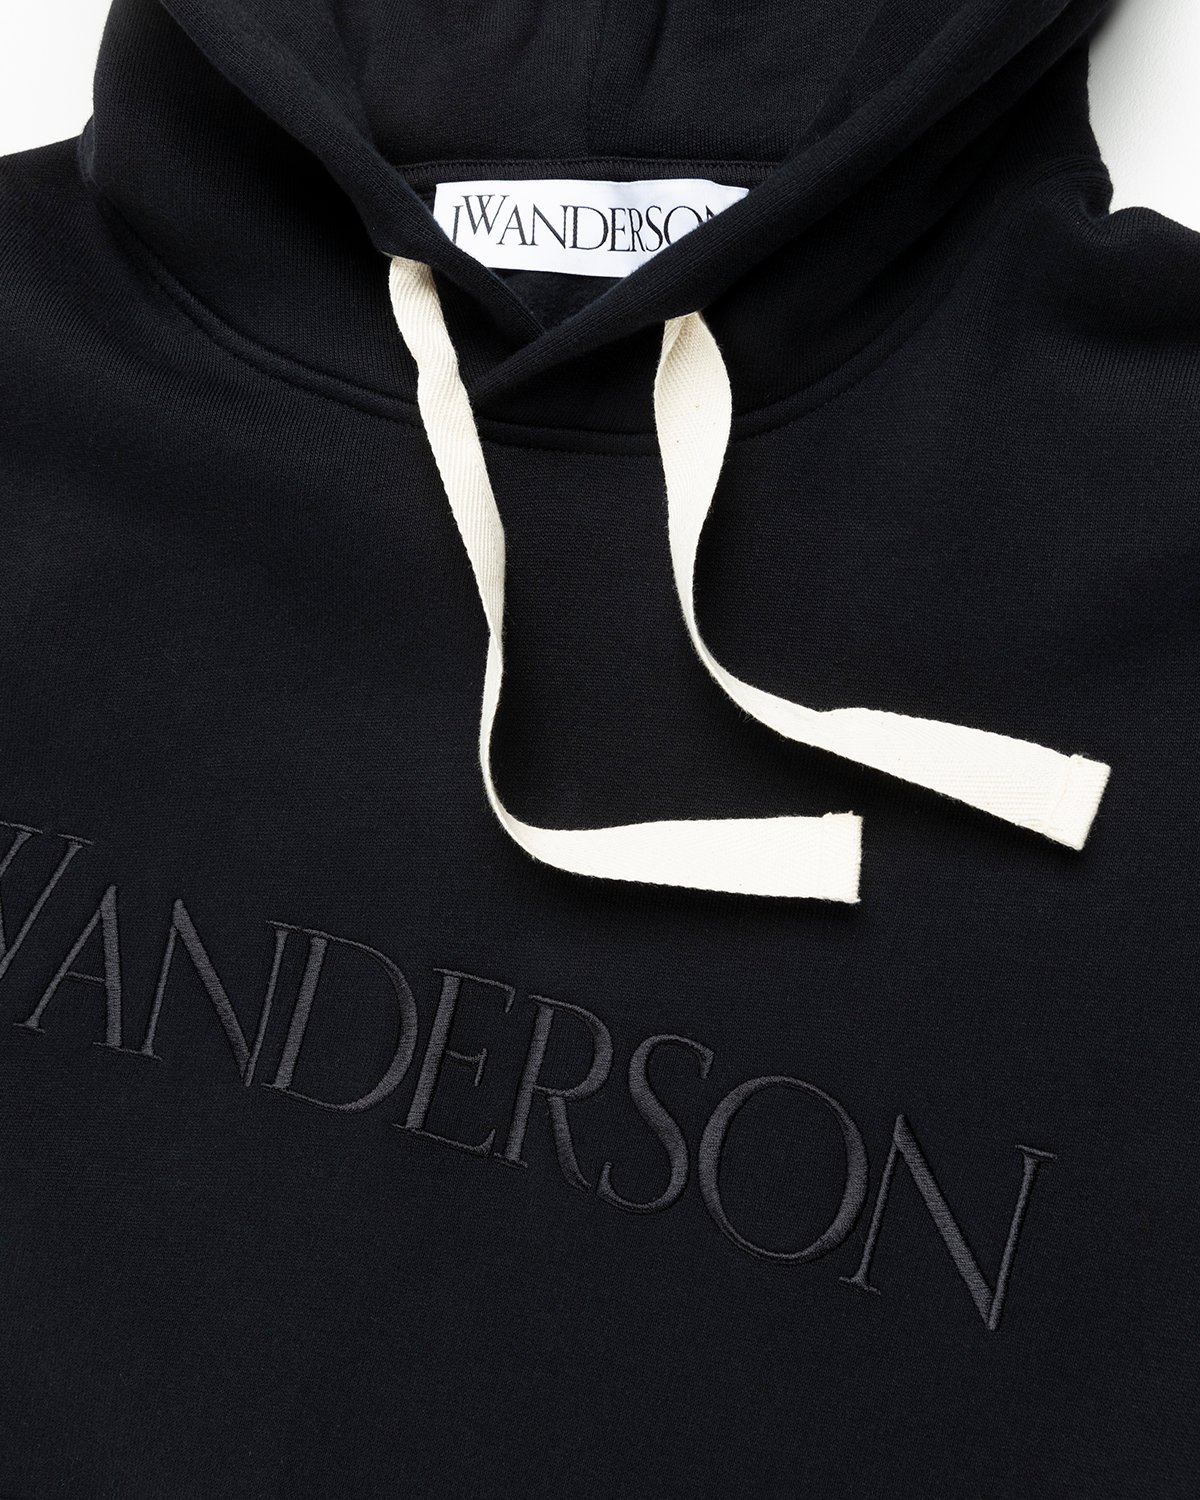 J.W. Anderson - Classic Logo Hoodie Black - Clothing - Black - Image 3